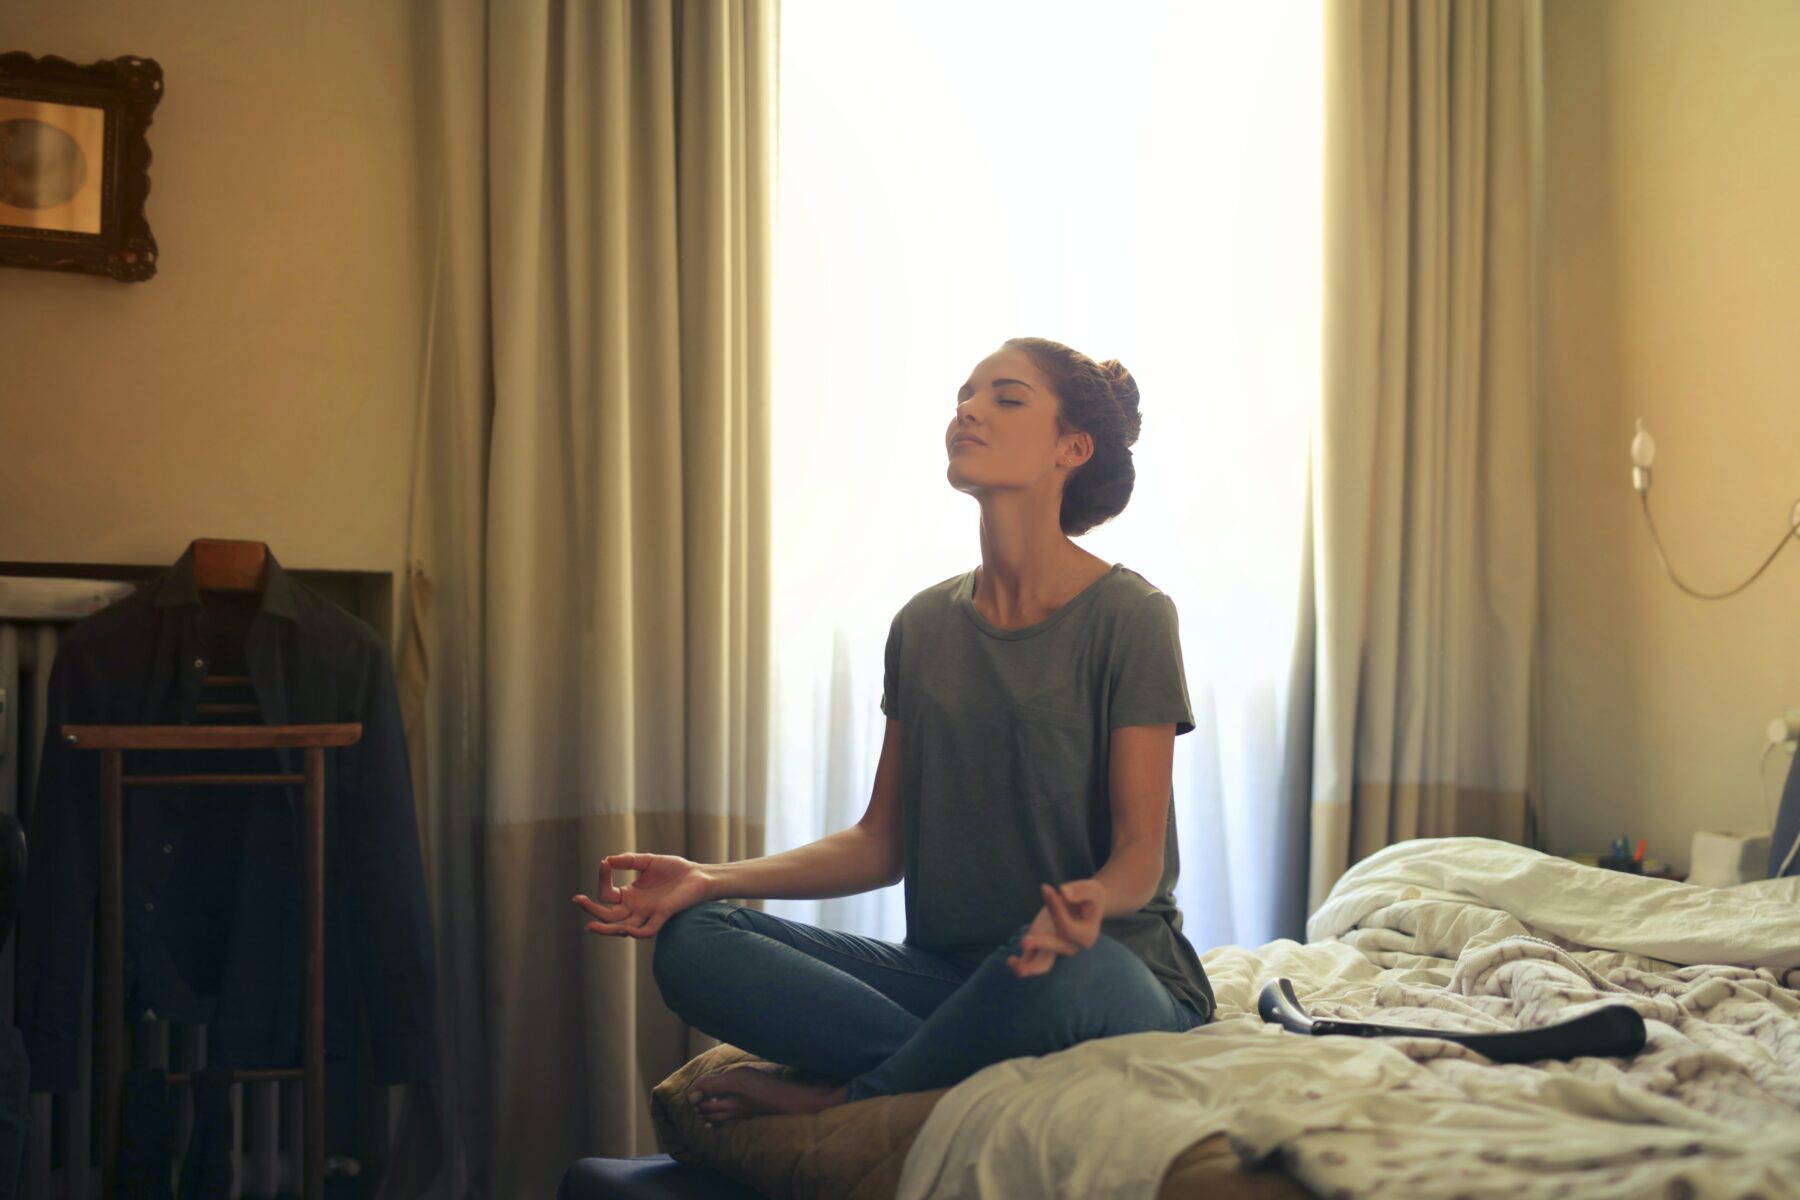 Woman in bedroom meditating.